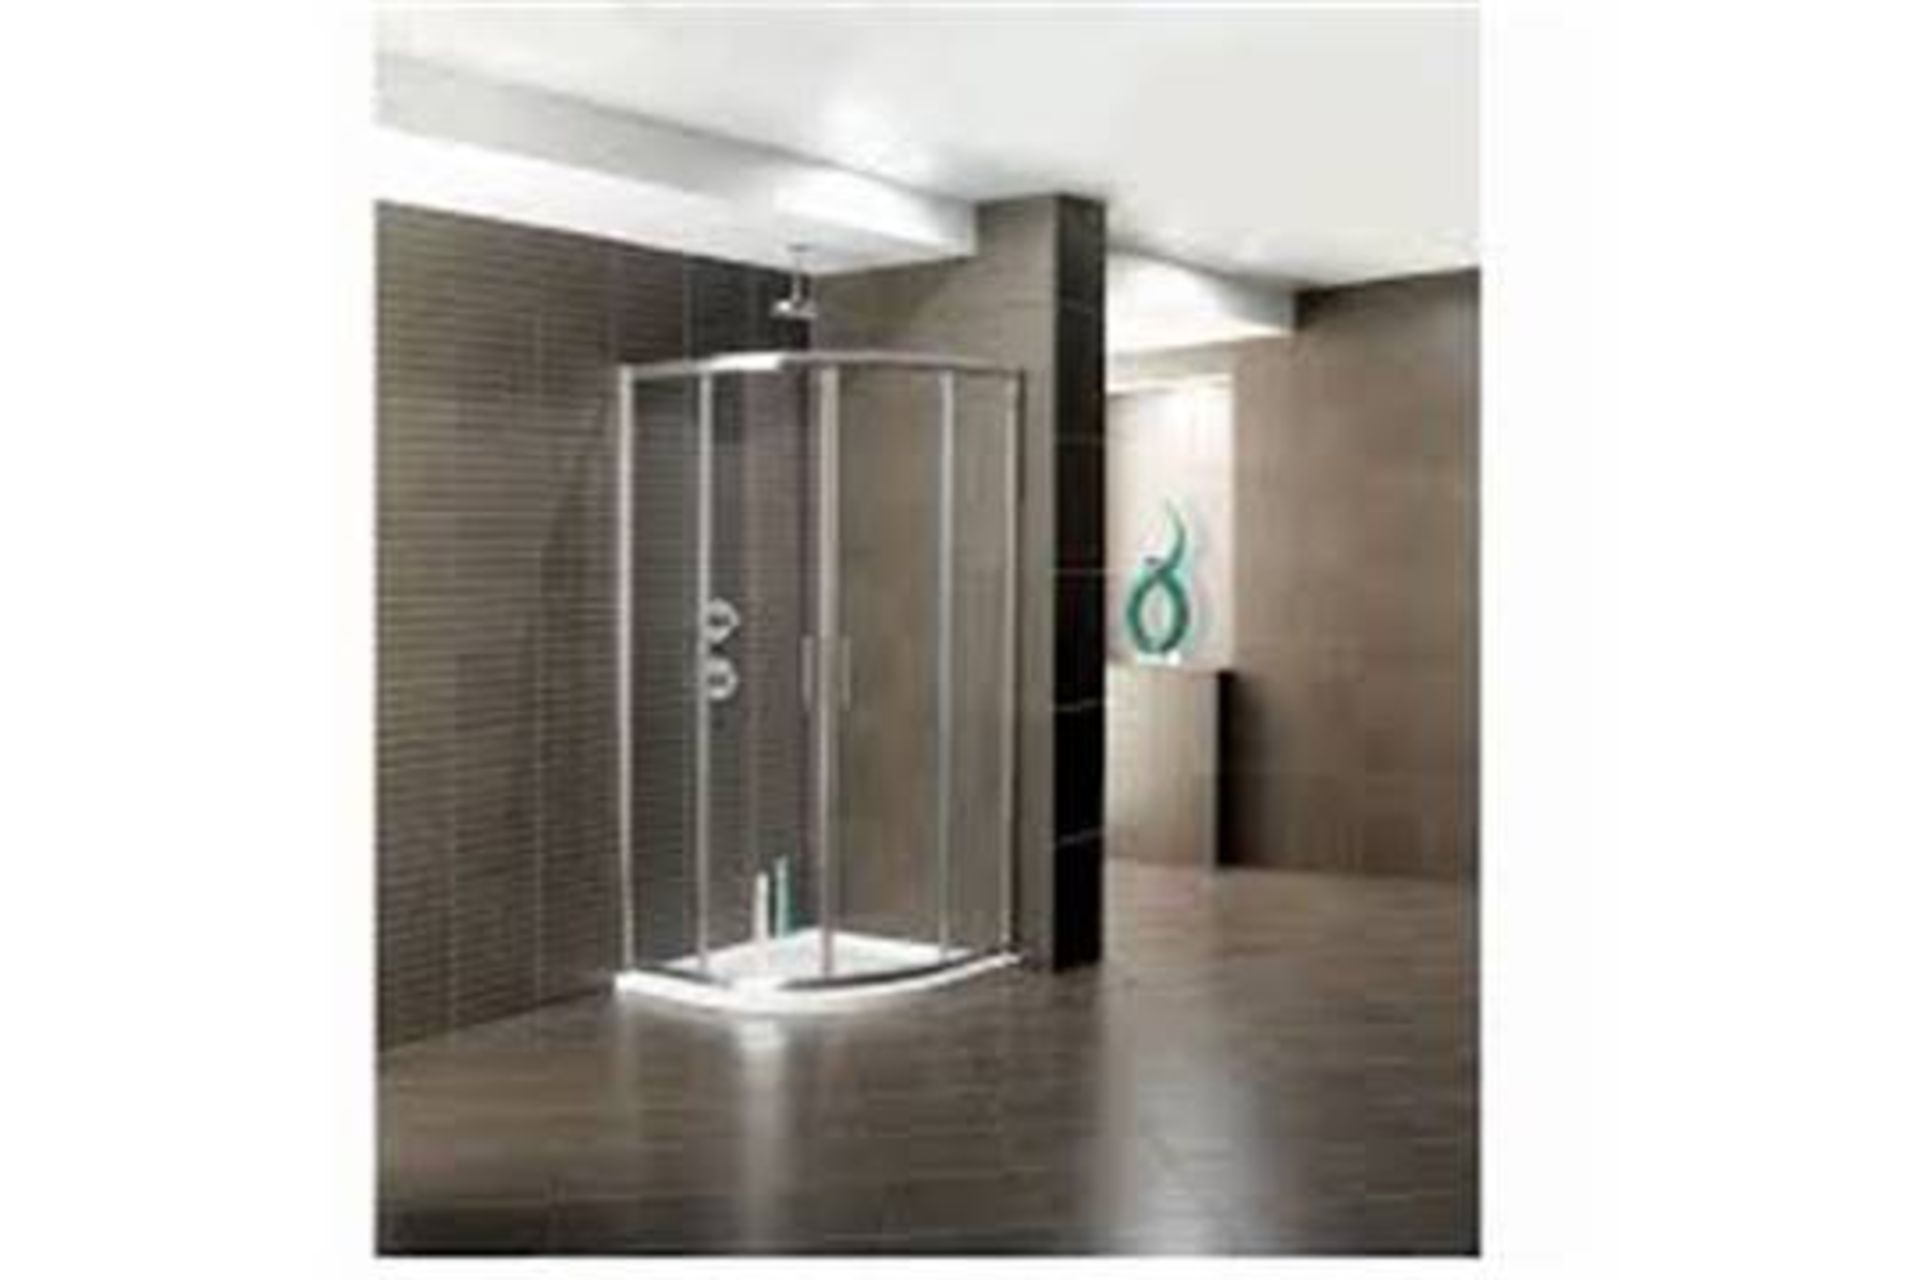 1 x Vogue SULIS Quadrant 800mm Shower Enclosure With Slimstone Shower Tray - Polished Chrome